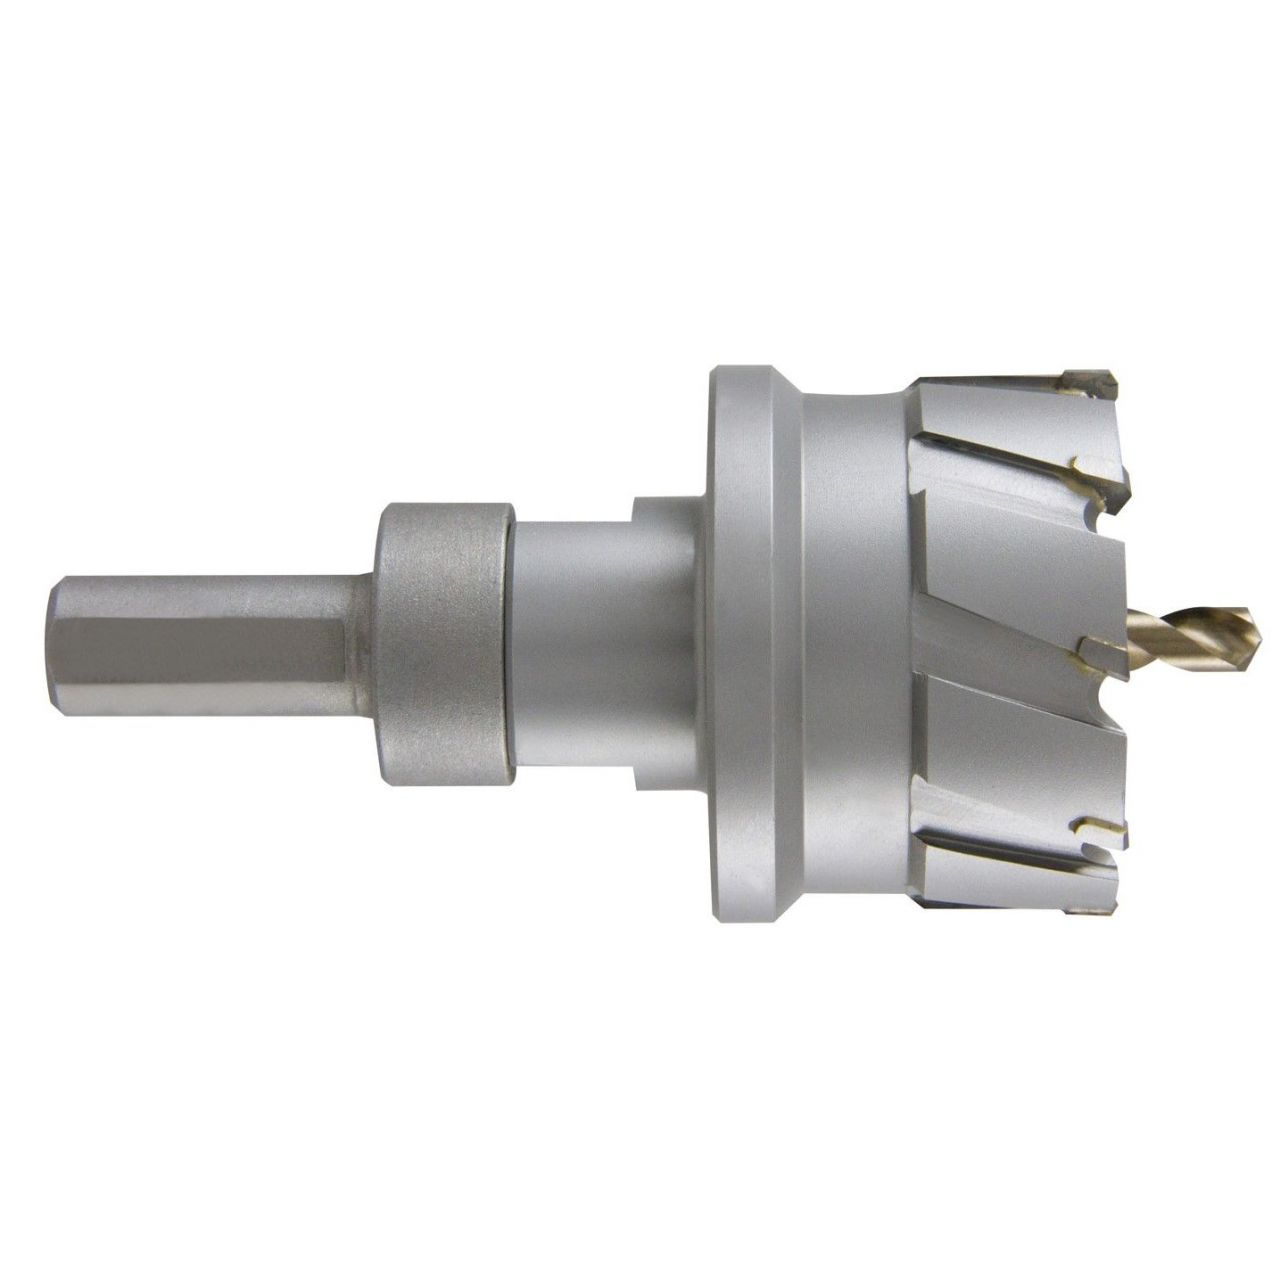 Corona perforadora metal duro universal (Ø 24,0 mm)